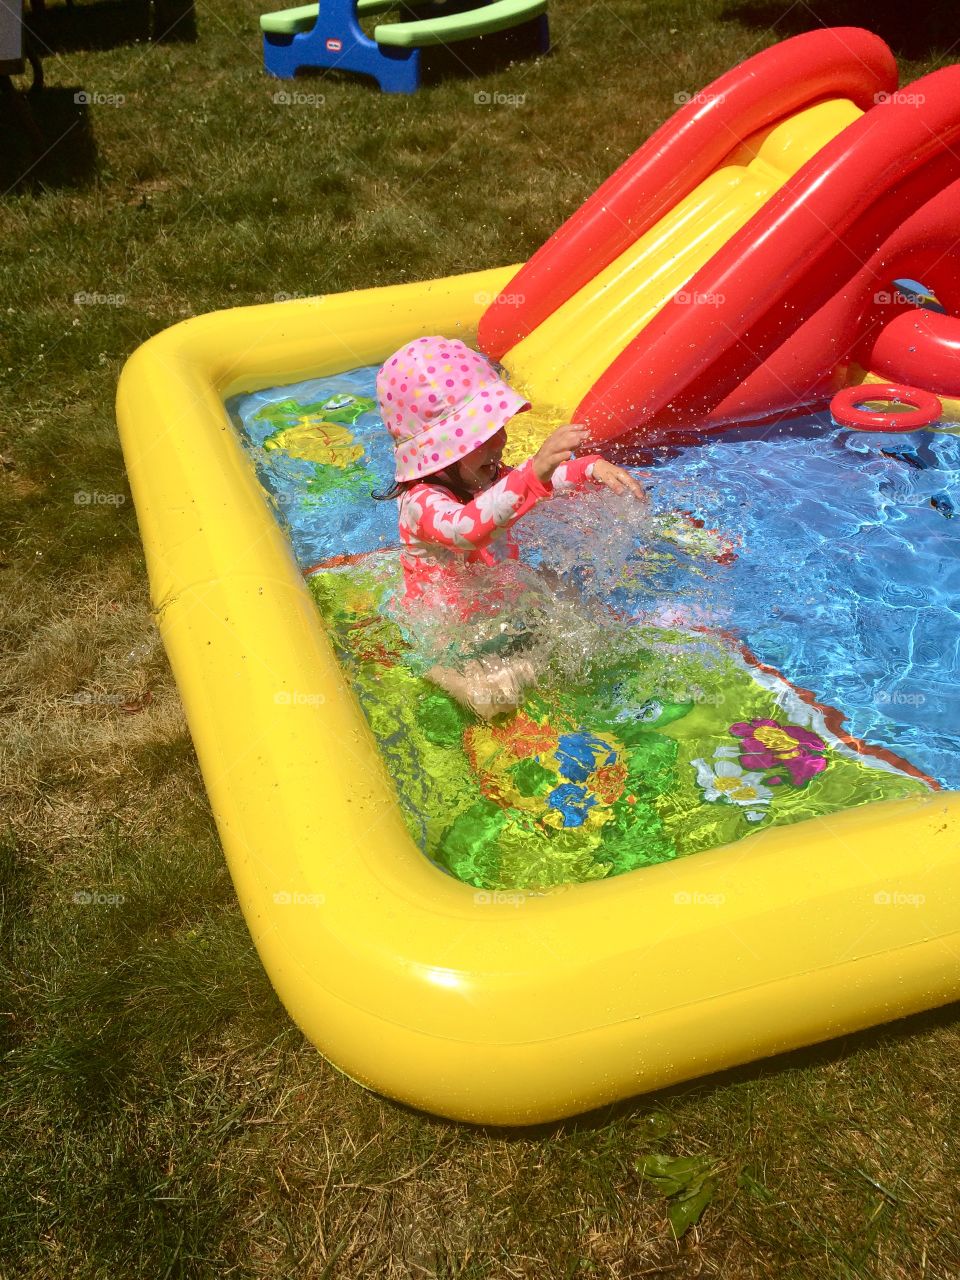 Little girl splashing around in a kiddie pool